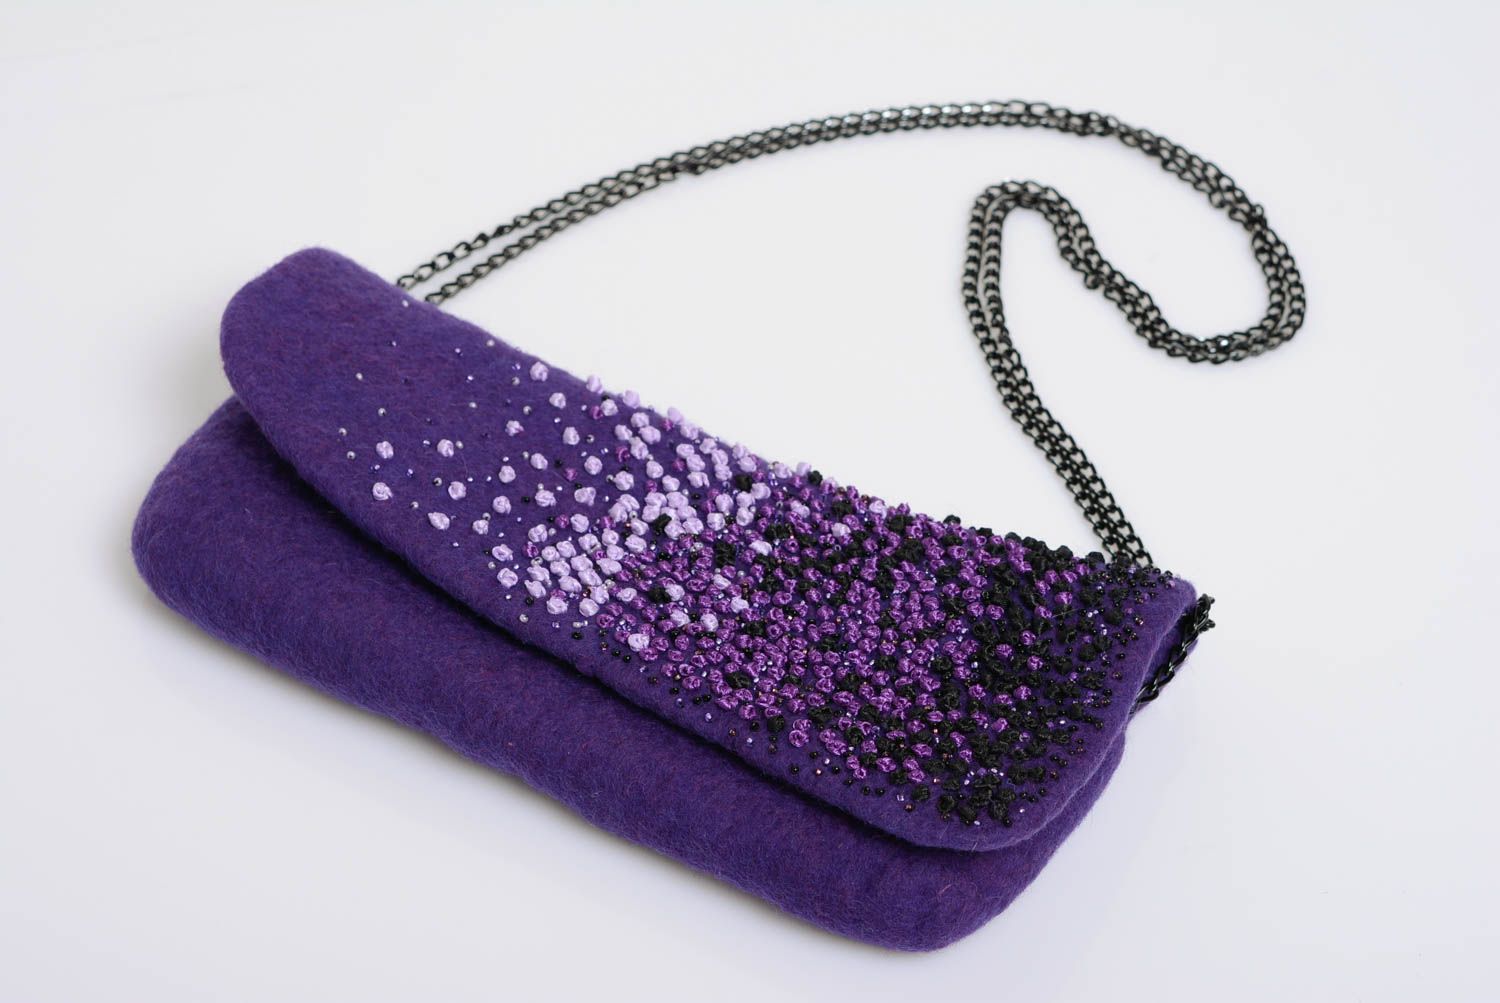 Handmade beautiful purple purse made using wool felting technique on chain photo 1